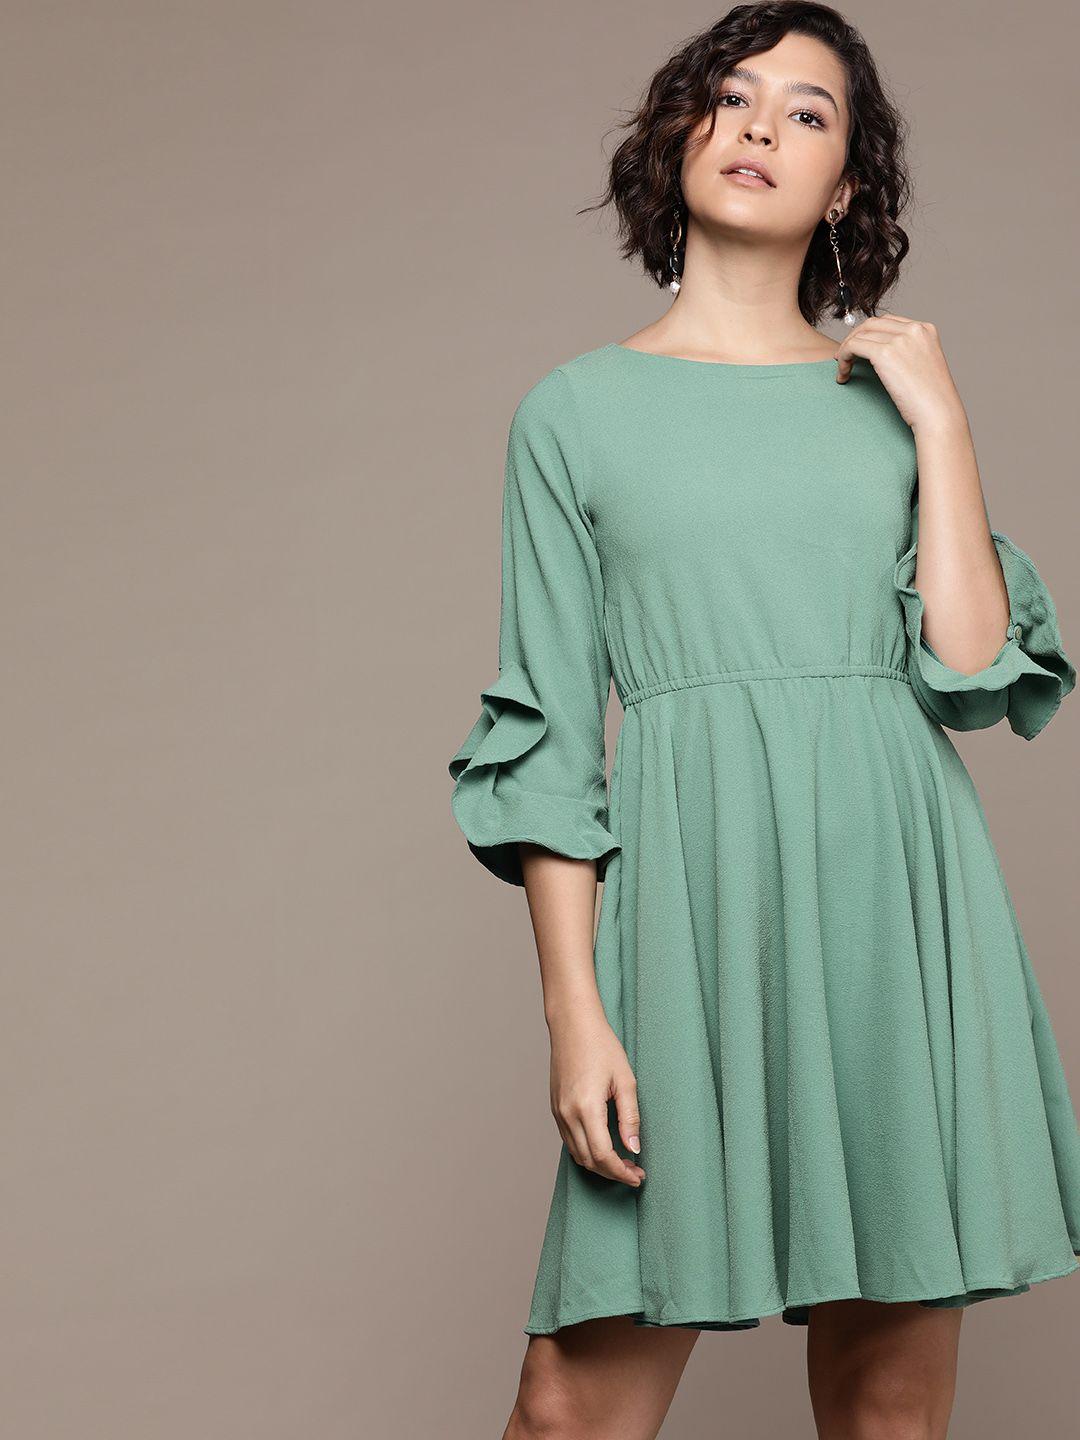 label ritu kumar green crepe short dress